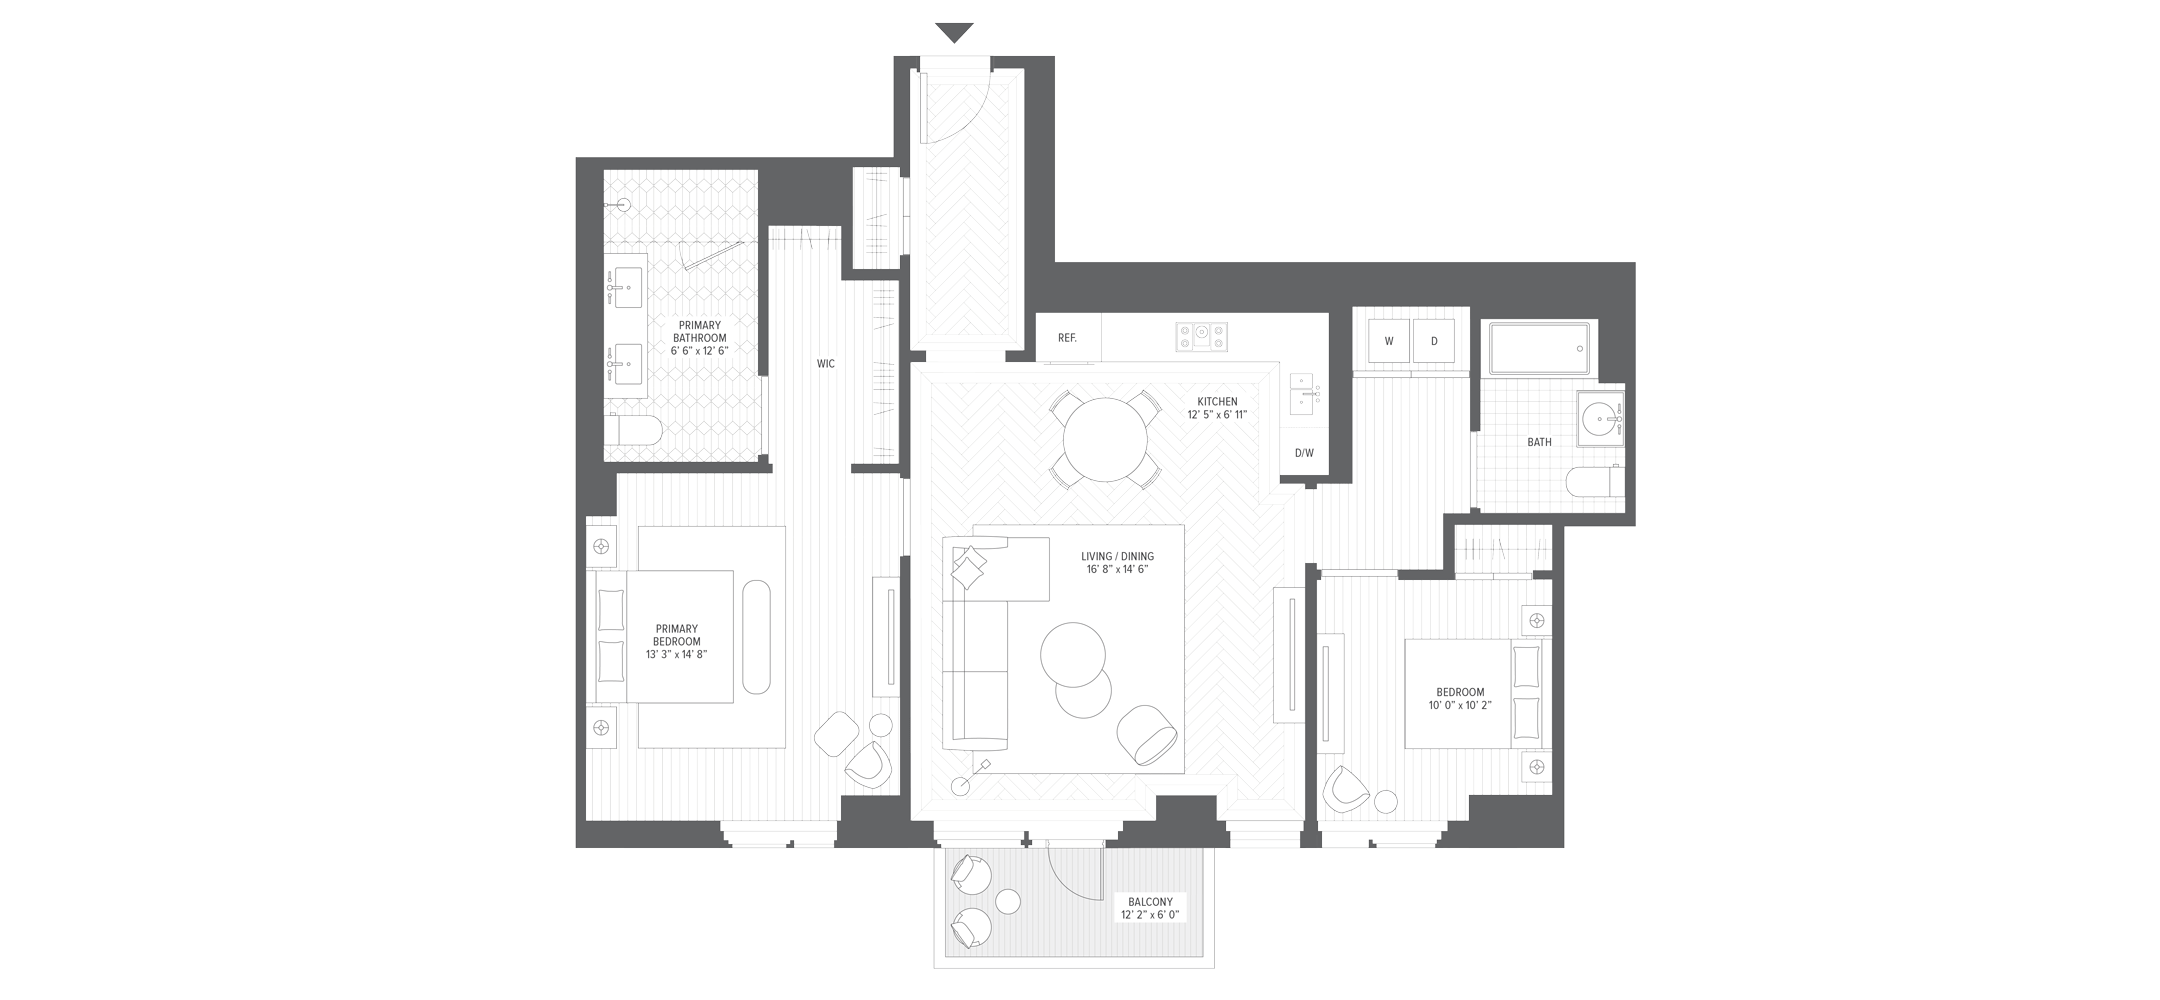 Unit 4C floorplan